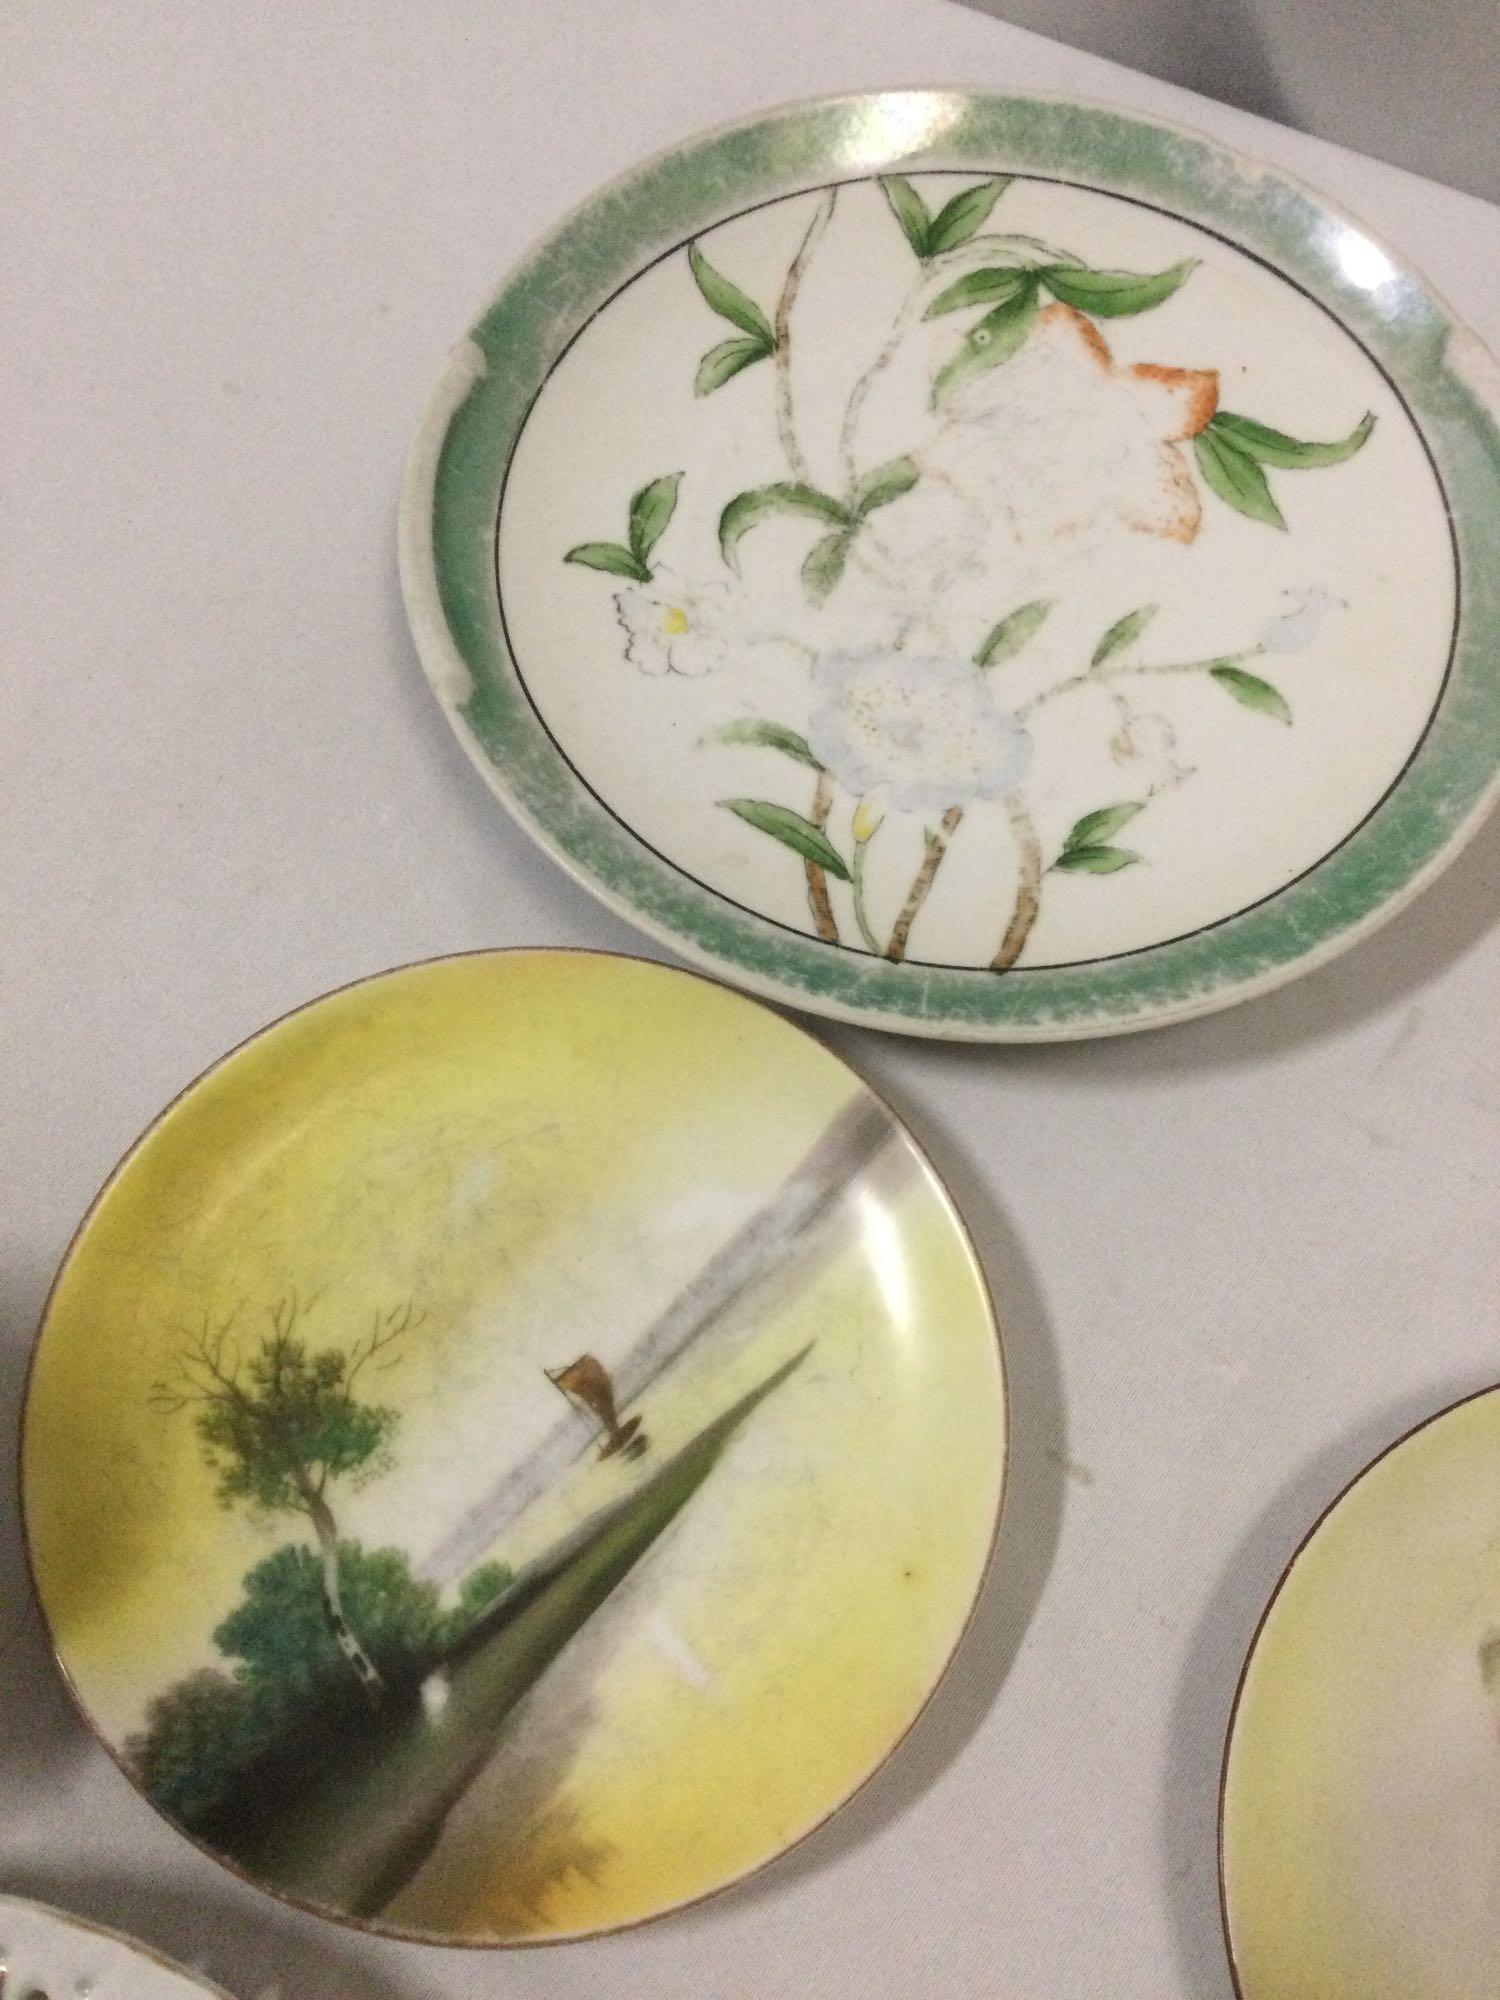 Large lot of vintage/antique porcelain tableware, cups, saucers, plates, bowls, shows wear, see